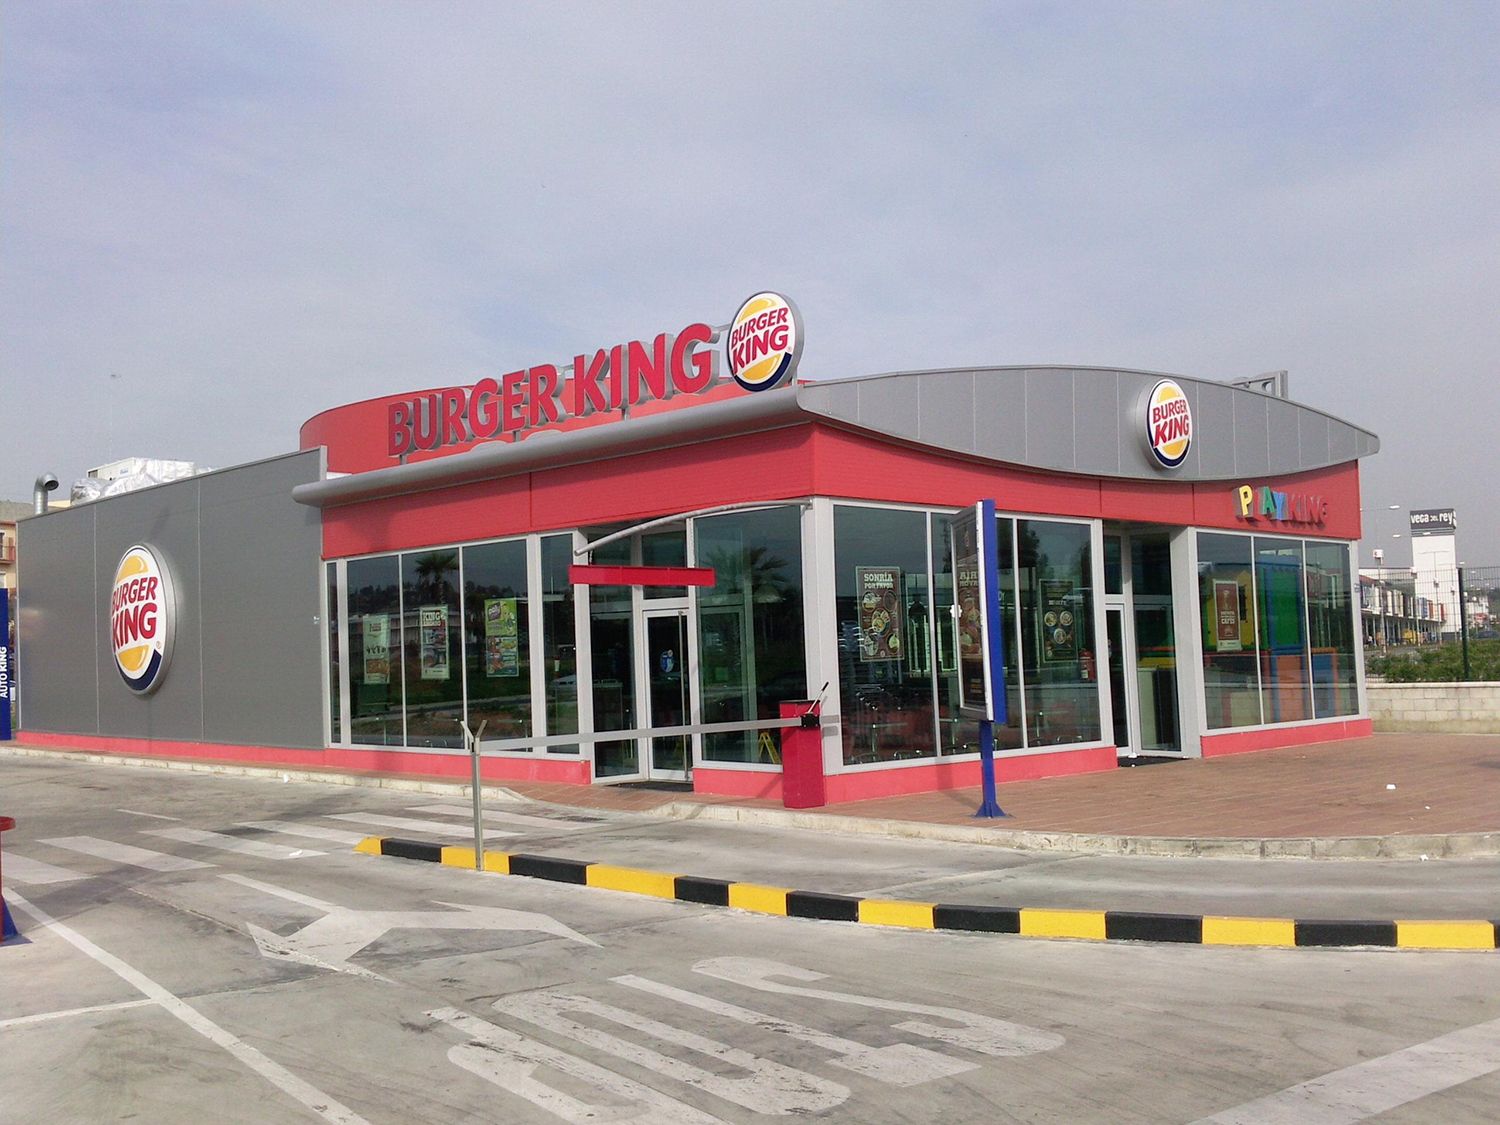 Establecimiento de Burger King en Camas (Sevilla). FOTO: TECNICISER.